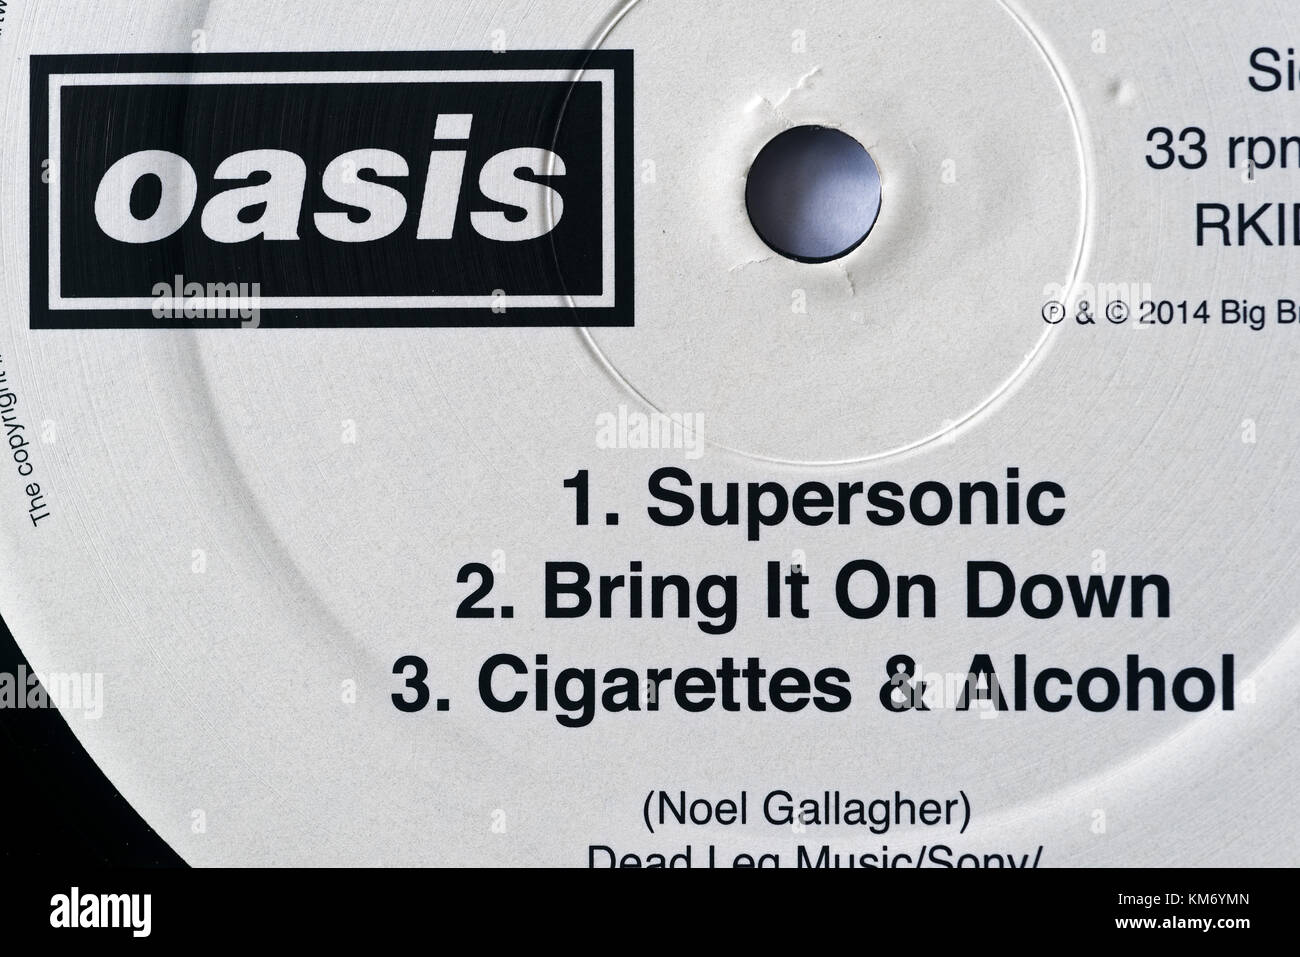 Oasis album Definitely Maybe label detail Stock Photo